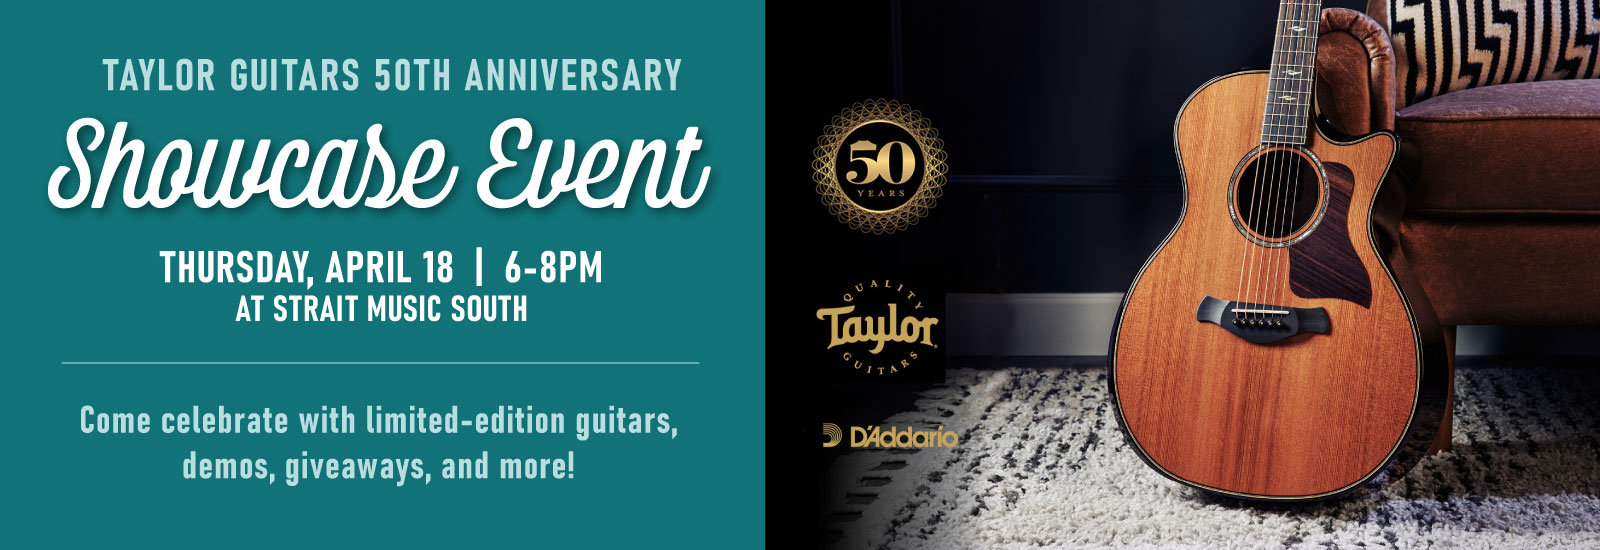 Taylor Guitar 50th Anniversary Showcase Event